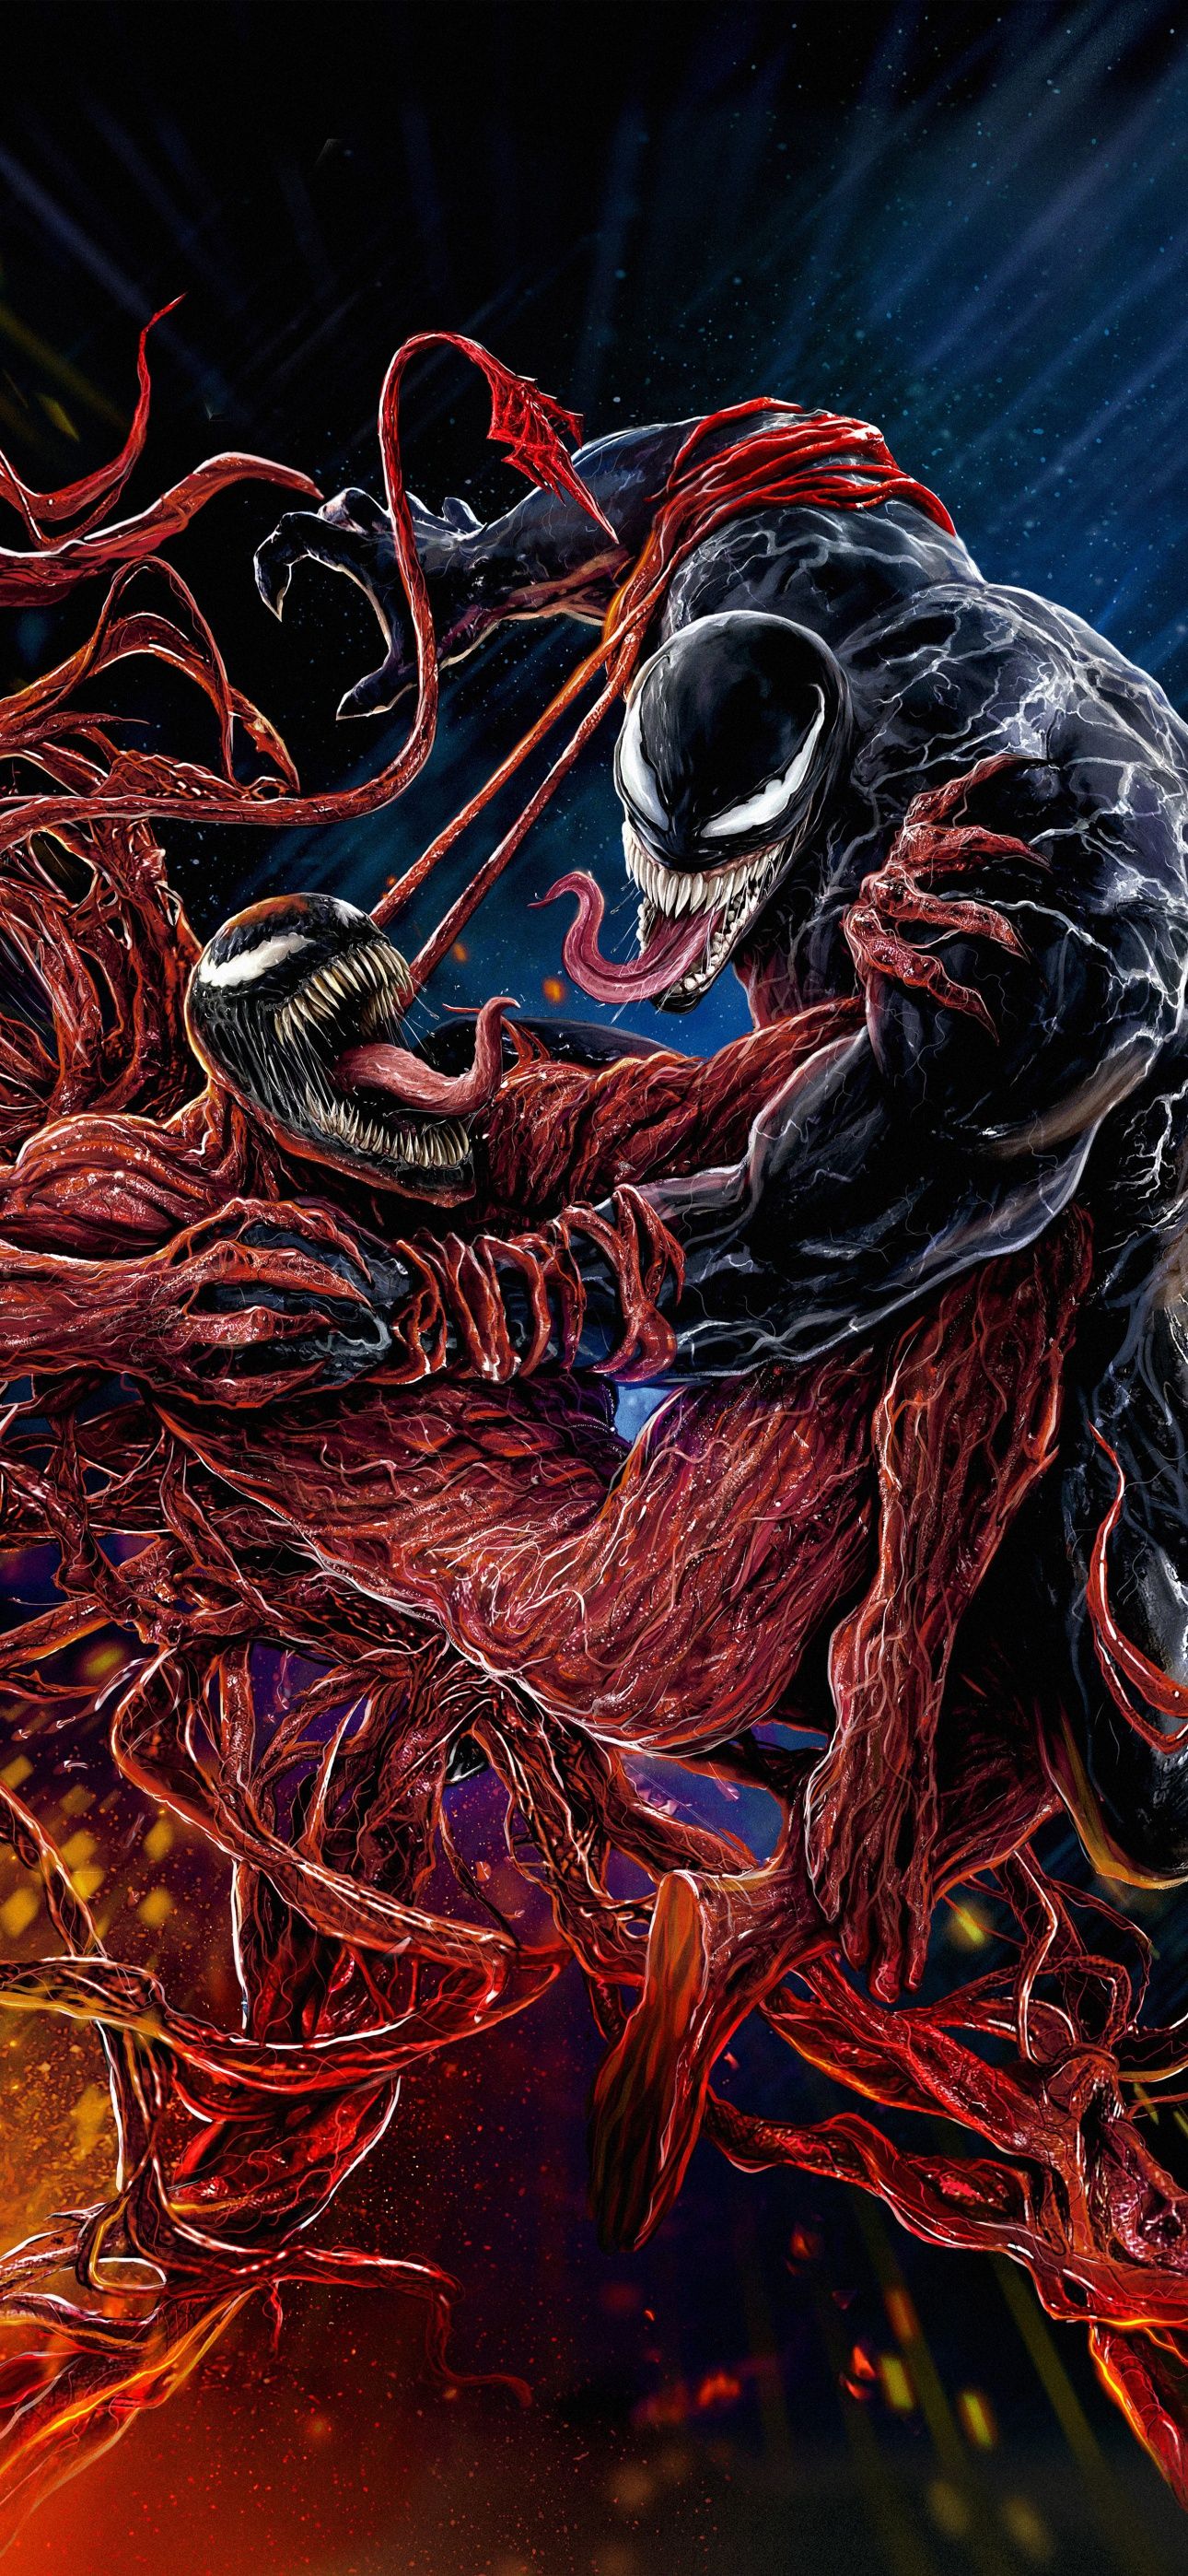  Venom Hintergrundbild 1290x2796. Venom: Let There Be Carnage Wallpaper 4K, Venom Marvel Comics